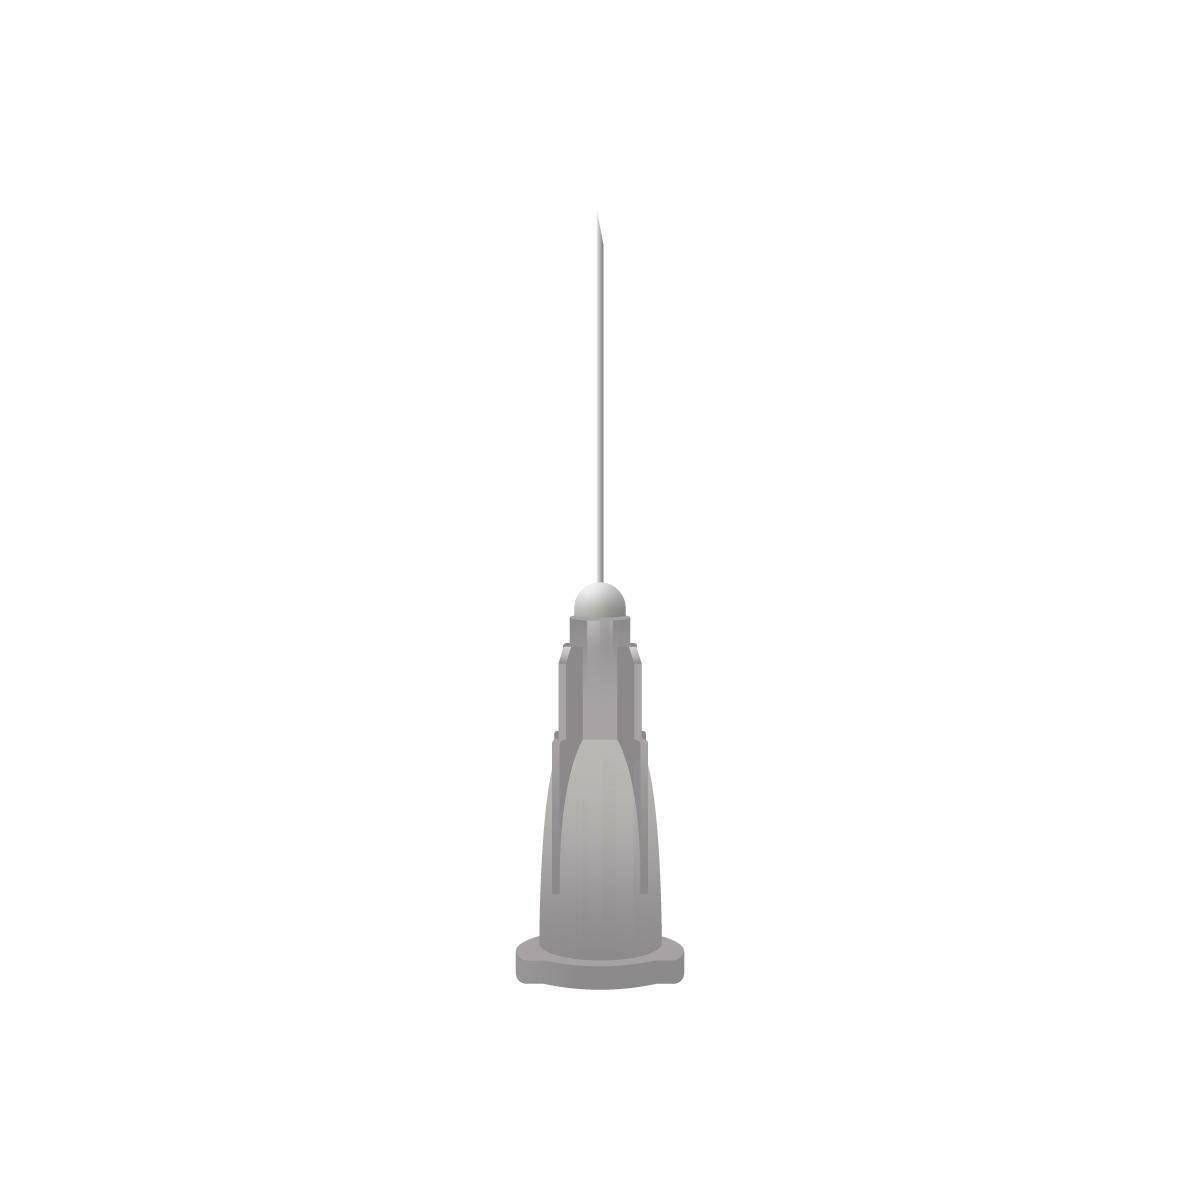 27g Grey 0.75 inch BD Microlance Needles (19mm x 0.4mm) - UKMEDI